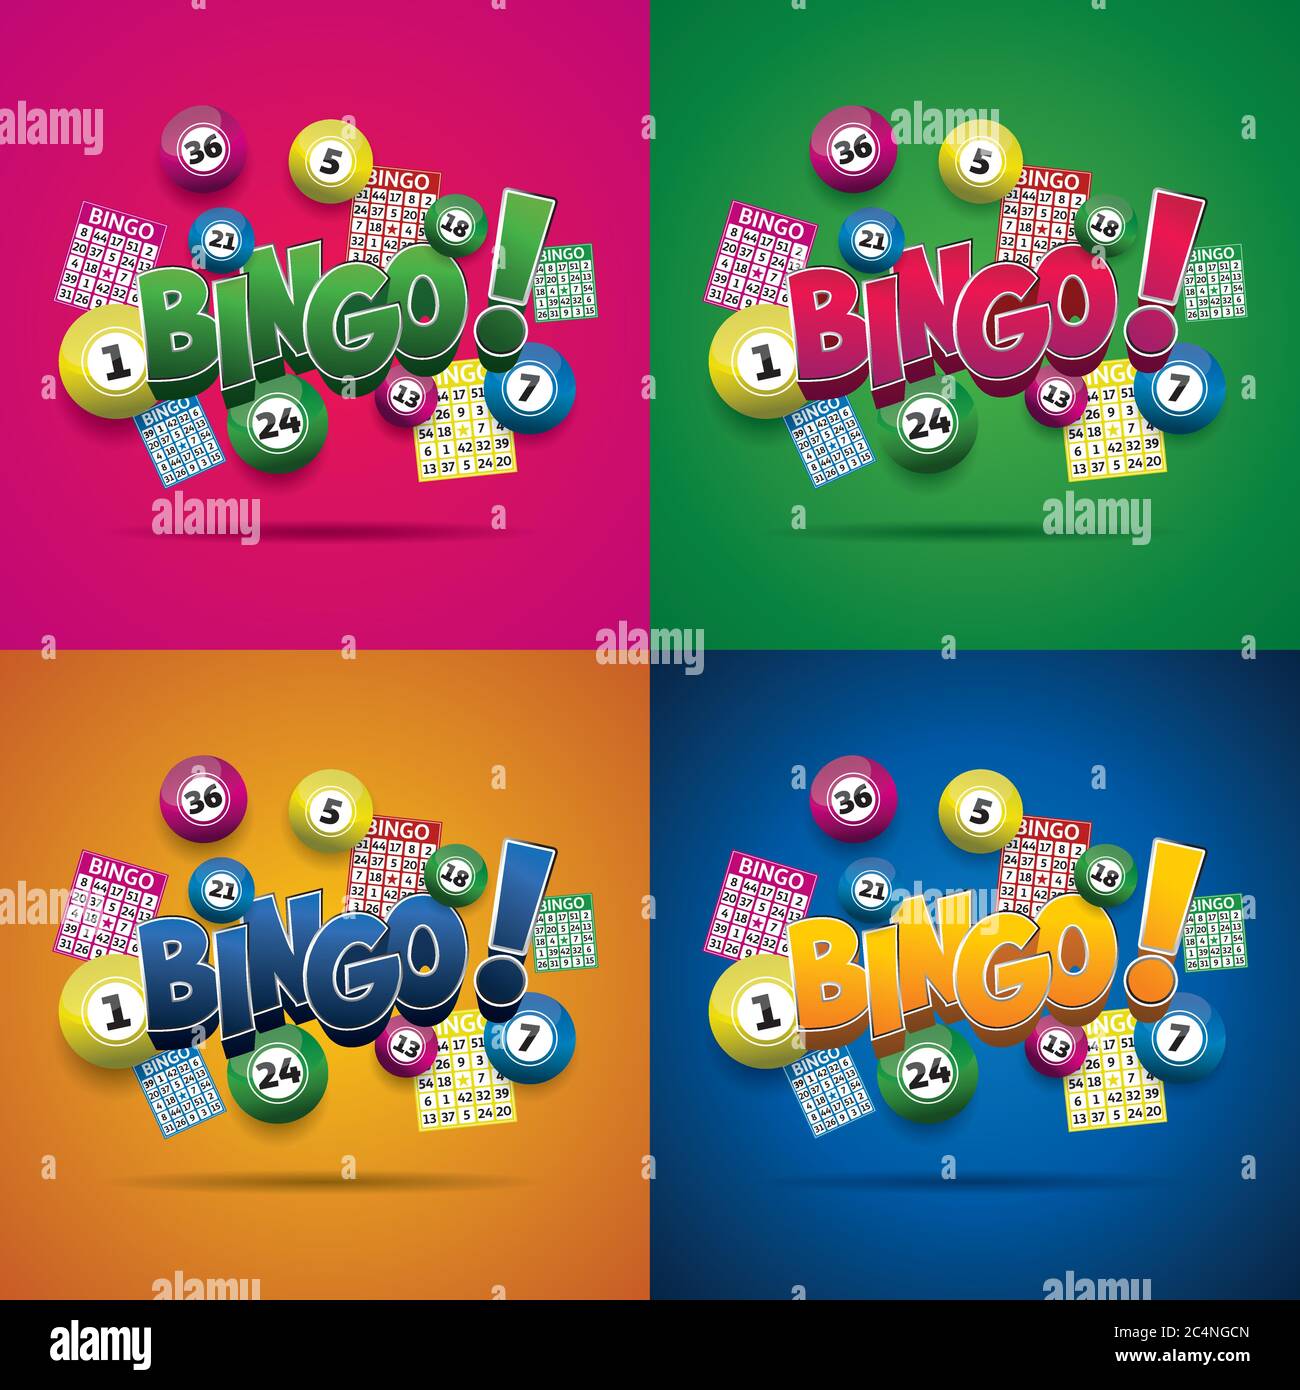 Bingo lottery balls and bingo cards concept vector illustration Stock ...